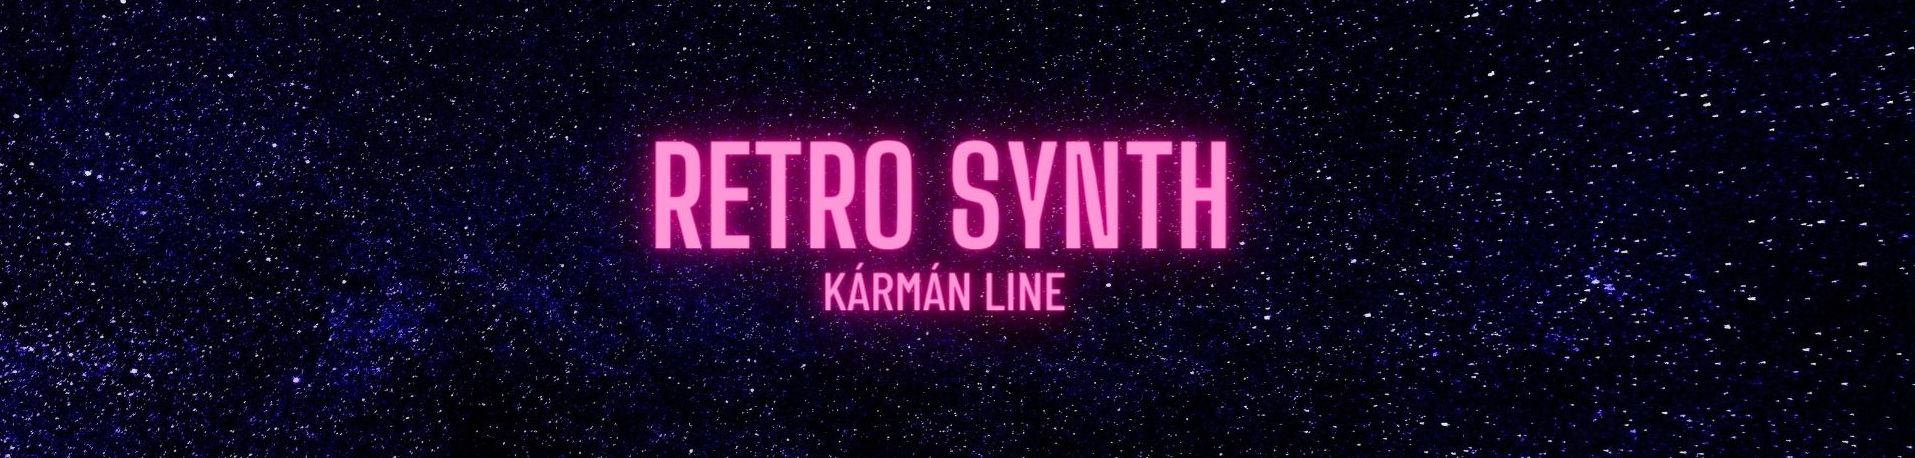 Retro synth music